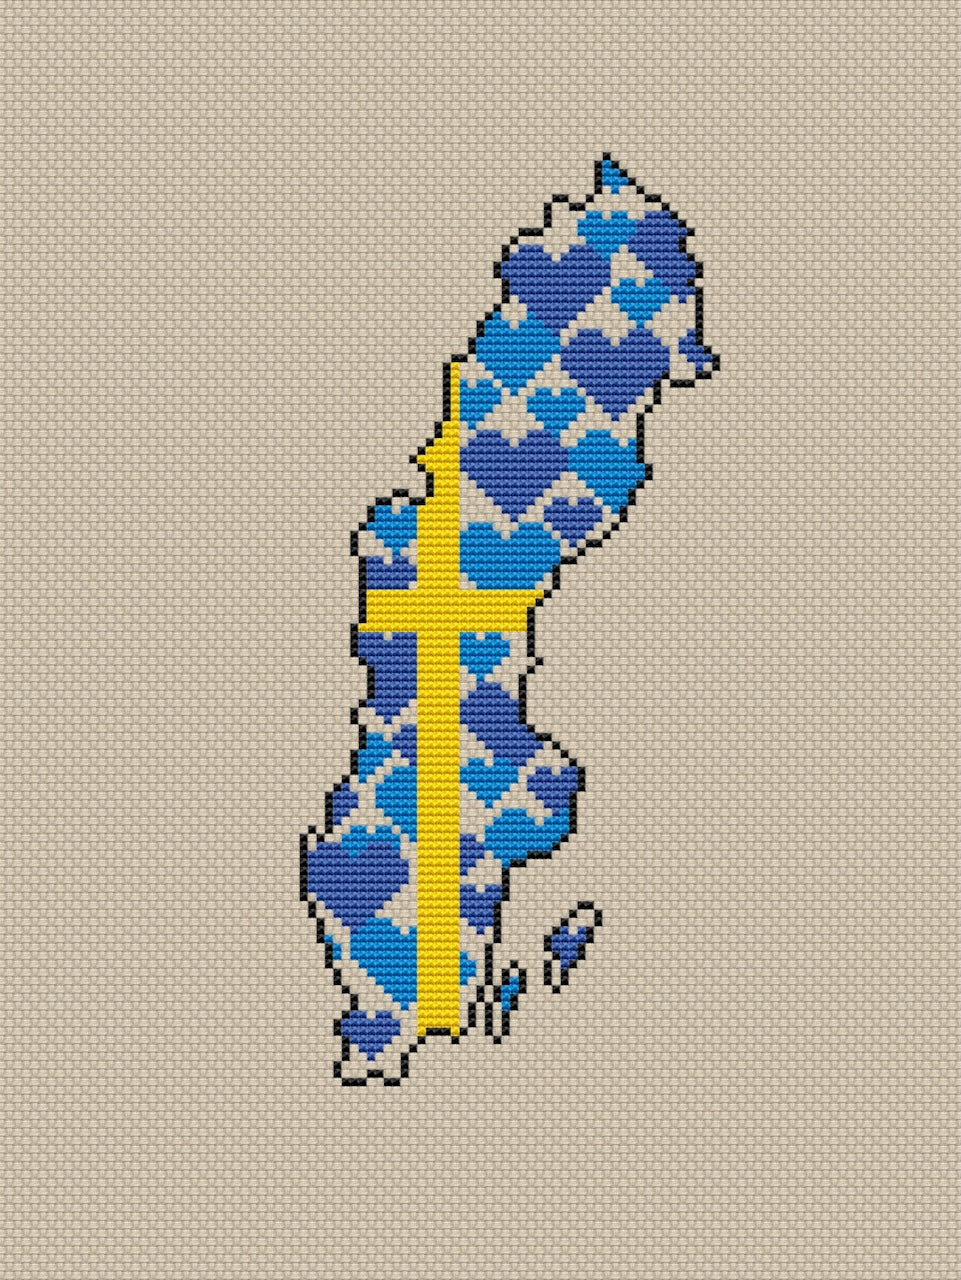 Sweden free cross stitch pattern